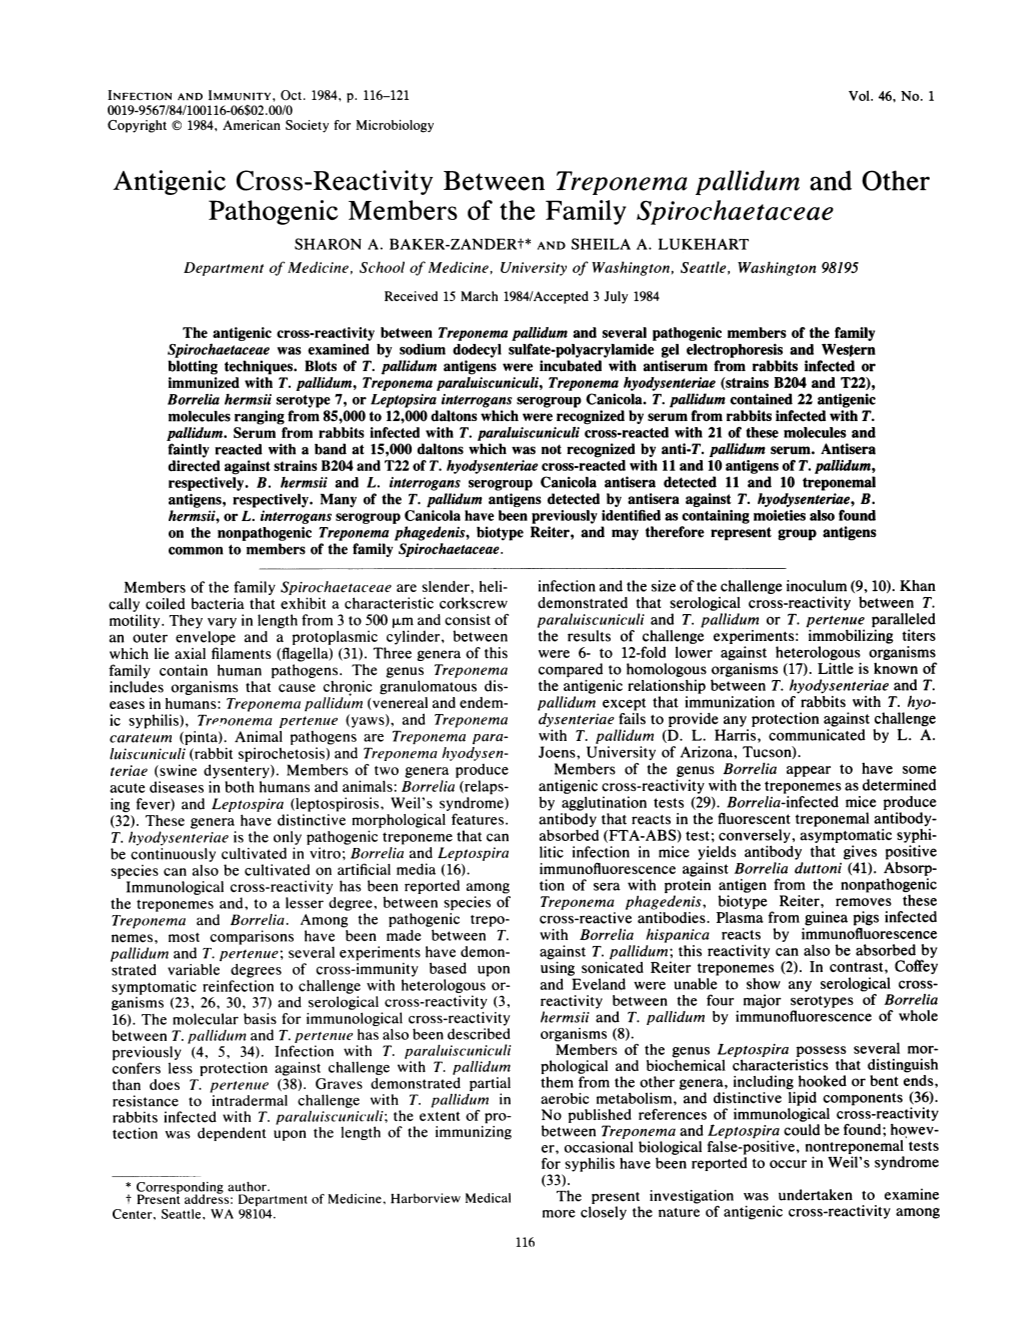 Antigenic Cross-Reactivity Between Treponema Pallidum and Other Pathogenic Members of the Family Spirochaetaceae SHARON A